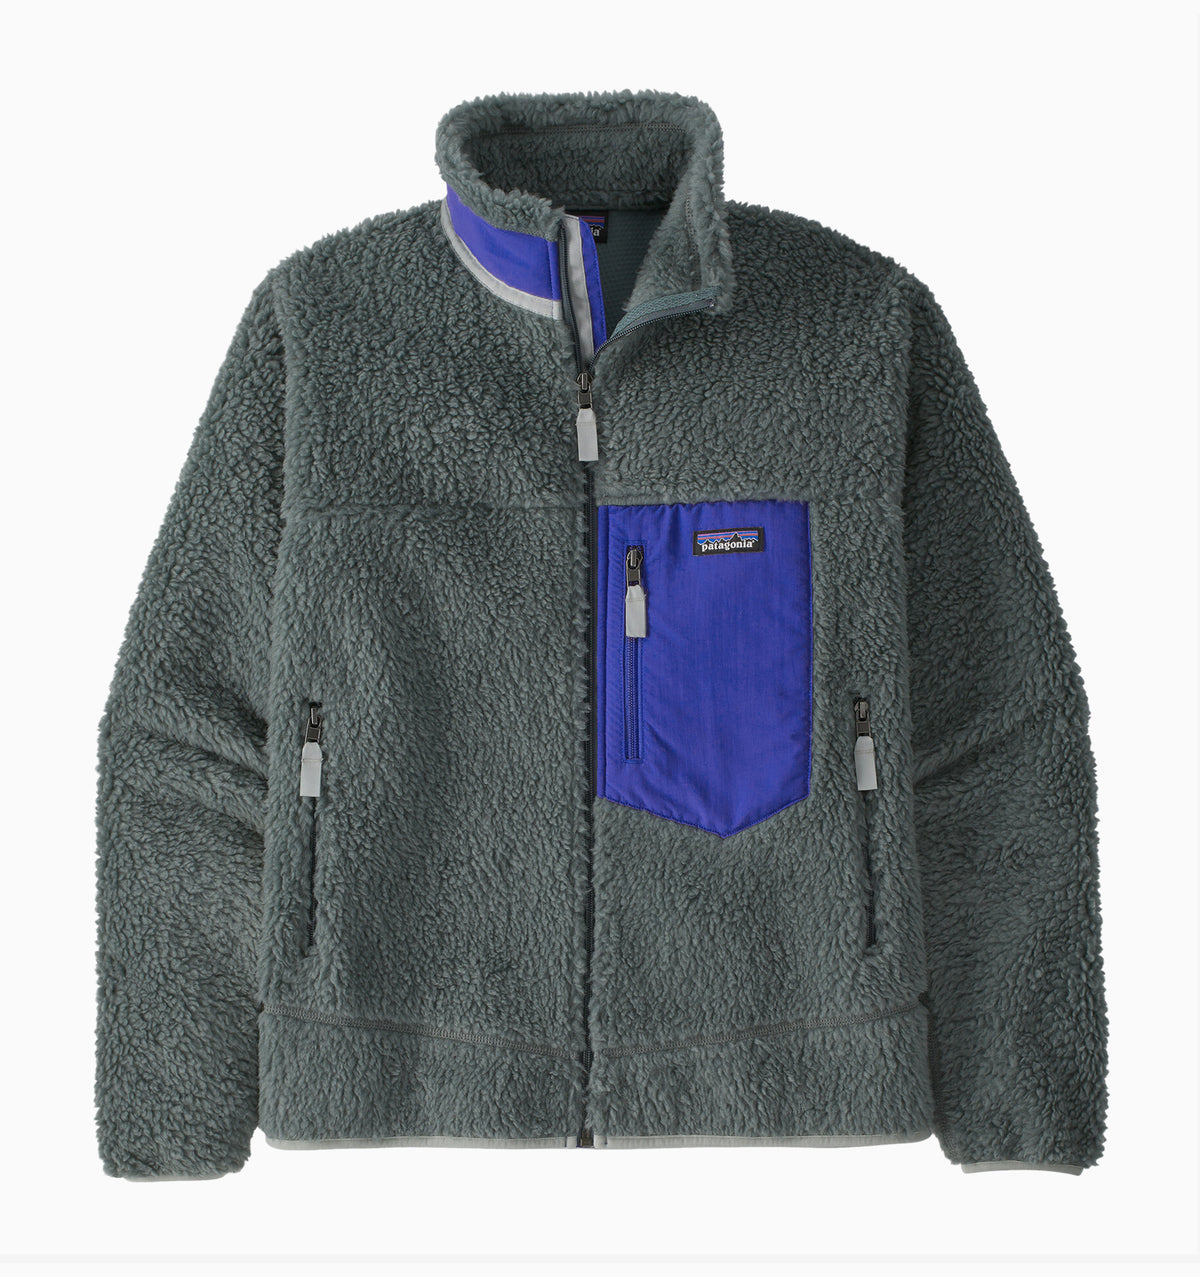 Patagonia Men's Classic Retro-X® Fleece Jacket - Nouveau Green